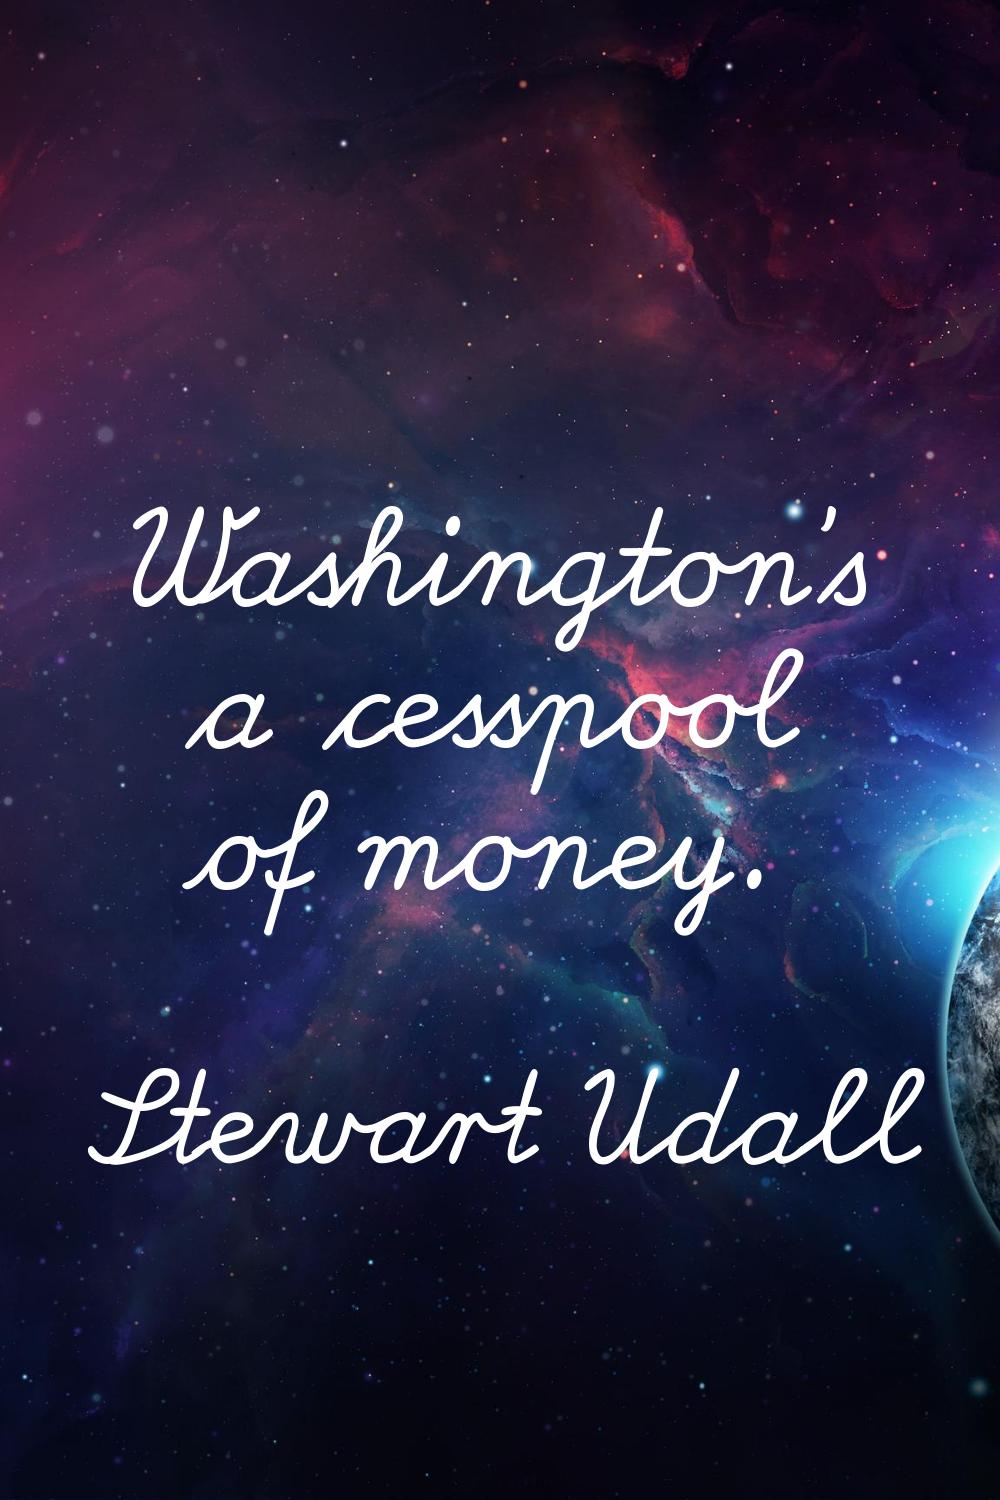 Washington's a cesspool of money.